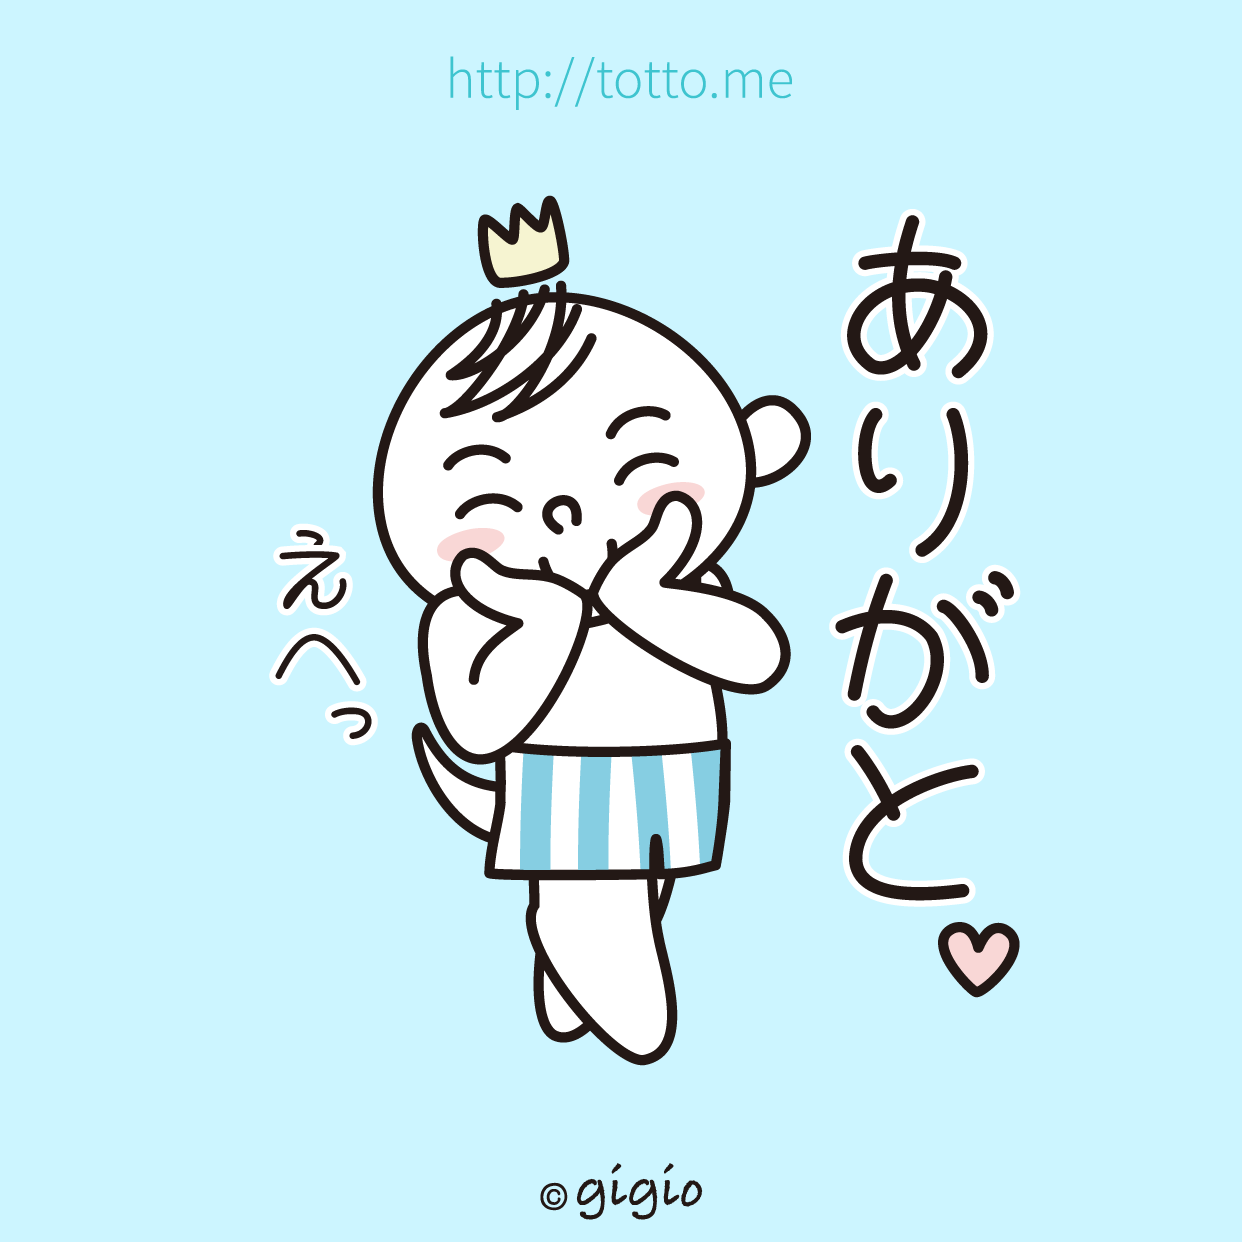 TOTTO’s Daily sticker